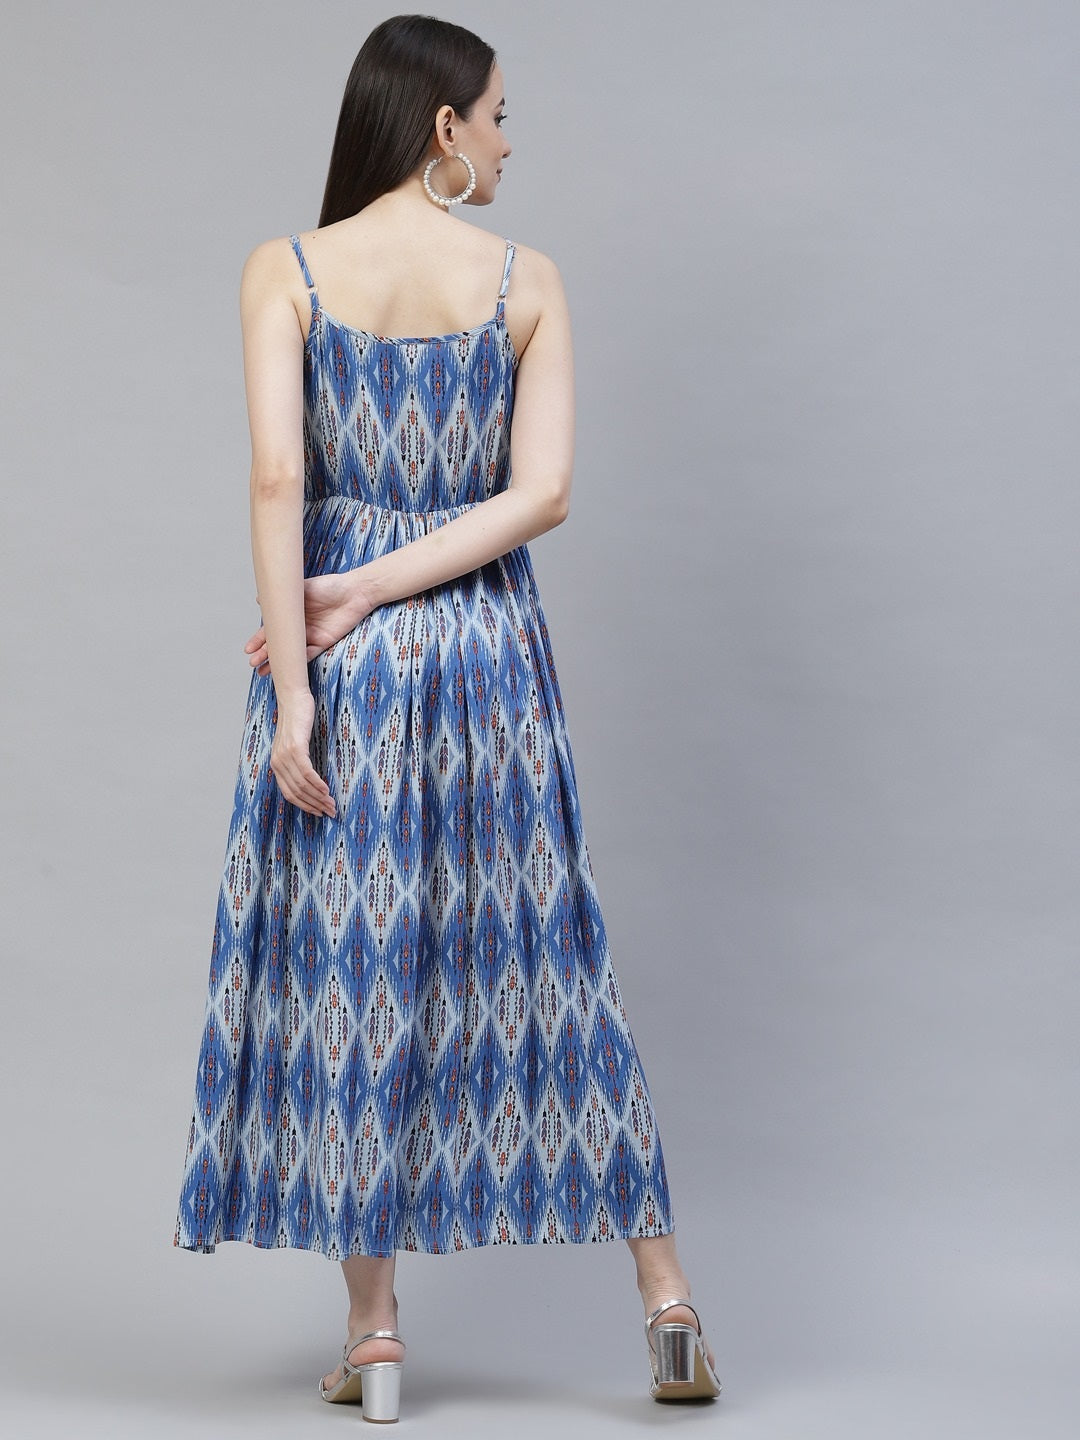 Blue Ethnic Printed Midi Dress